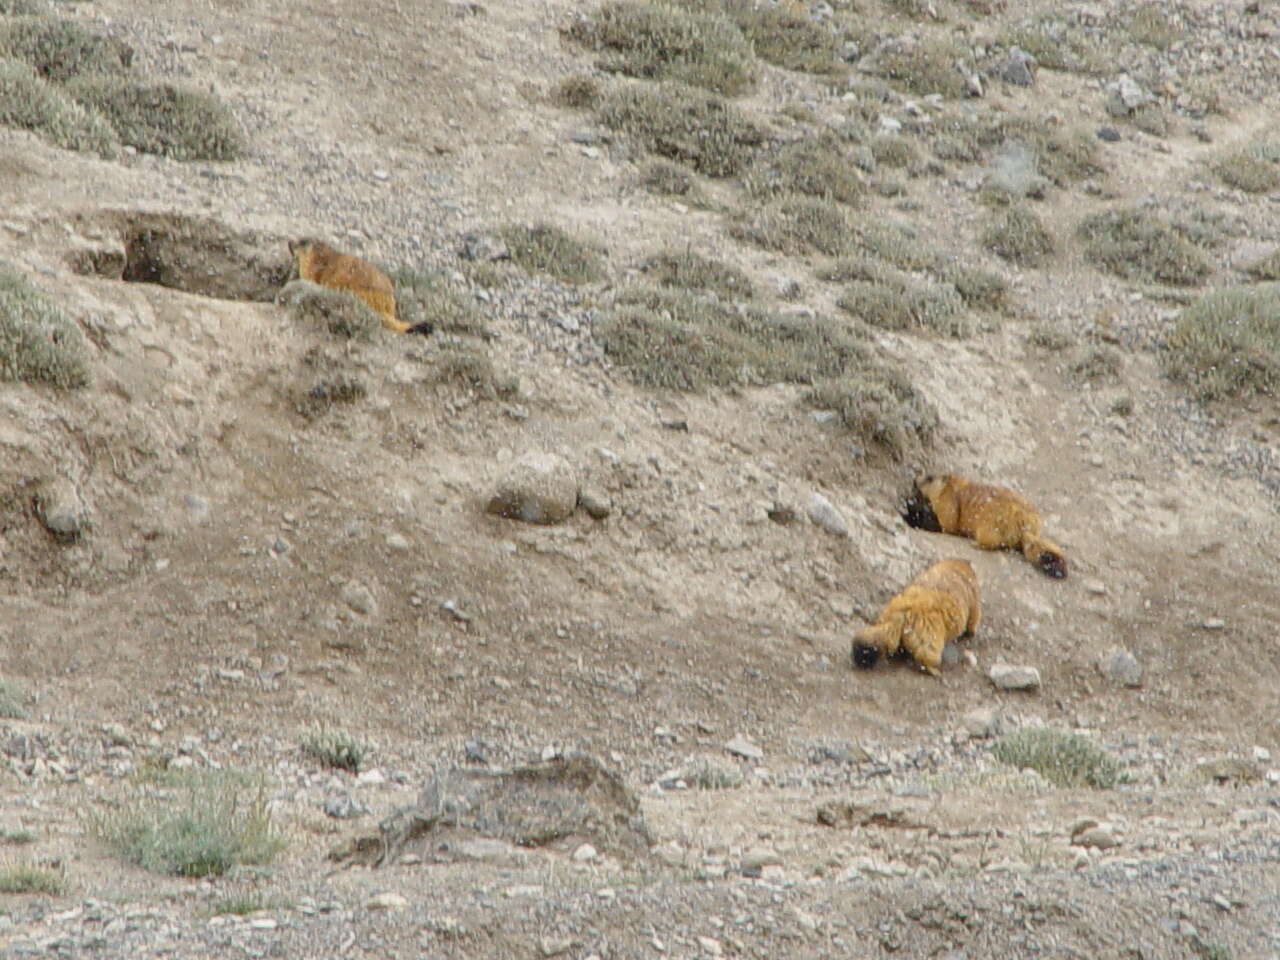 Image of Long-tailed Marmot